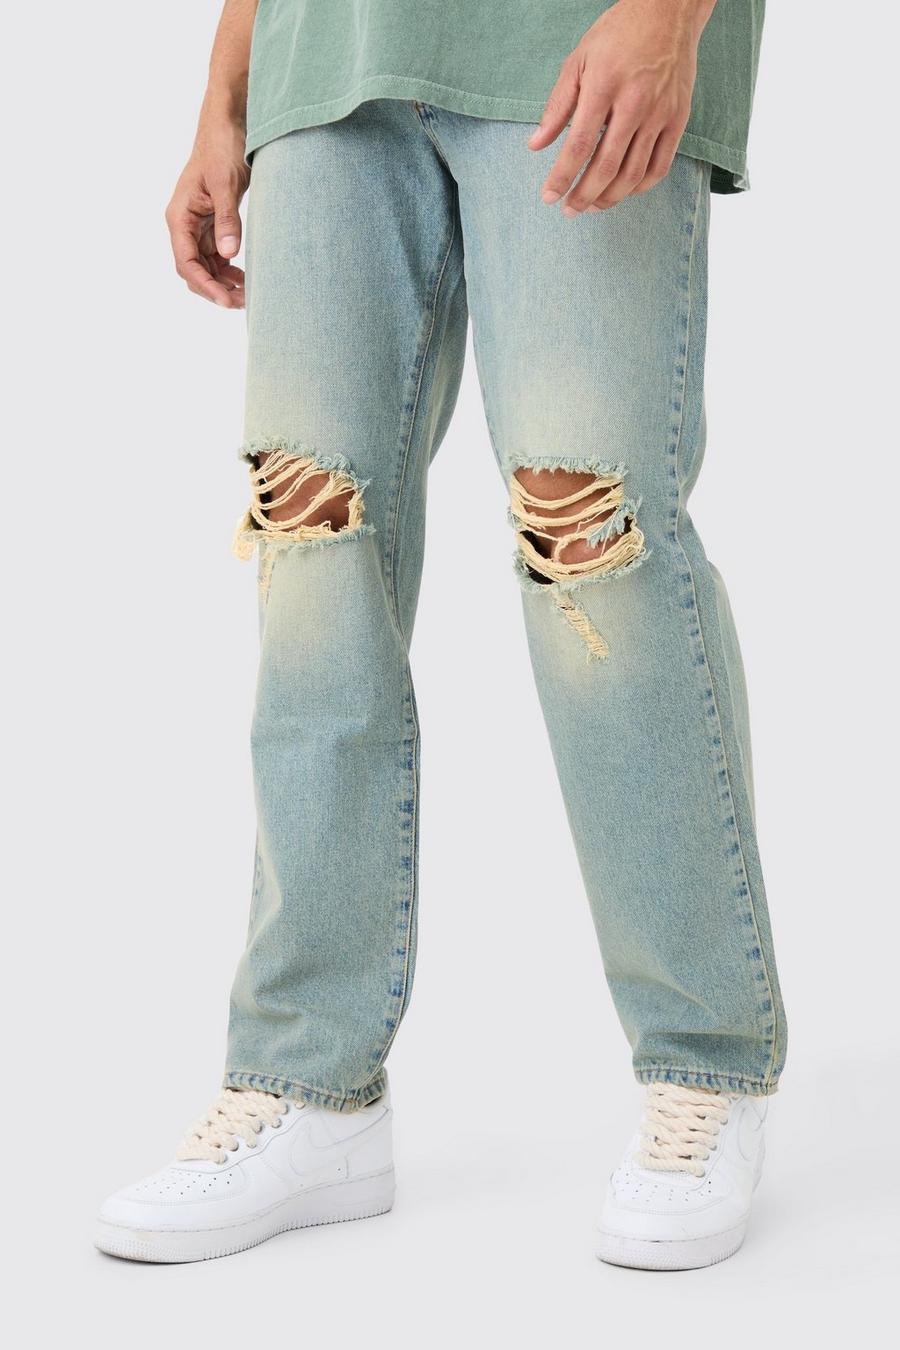 Jeans rilassati in denim rigido blu antico con strappi sul ginocchio, Antique blue image number 1